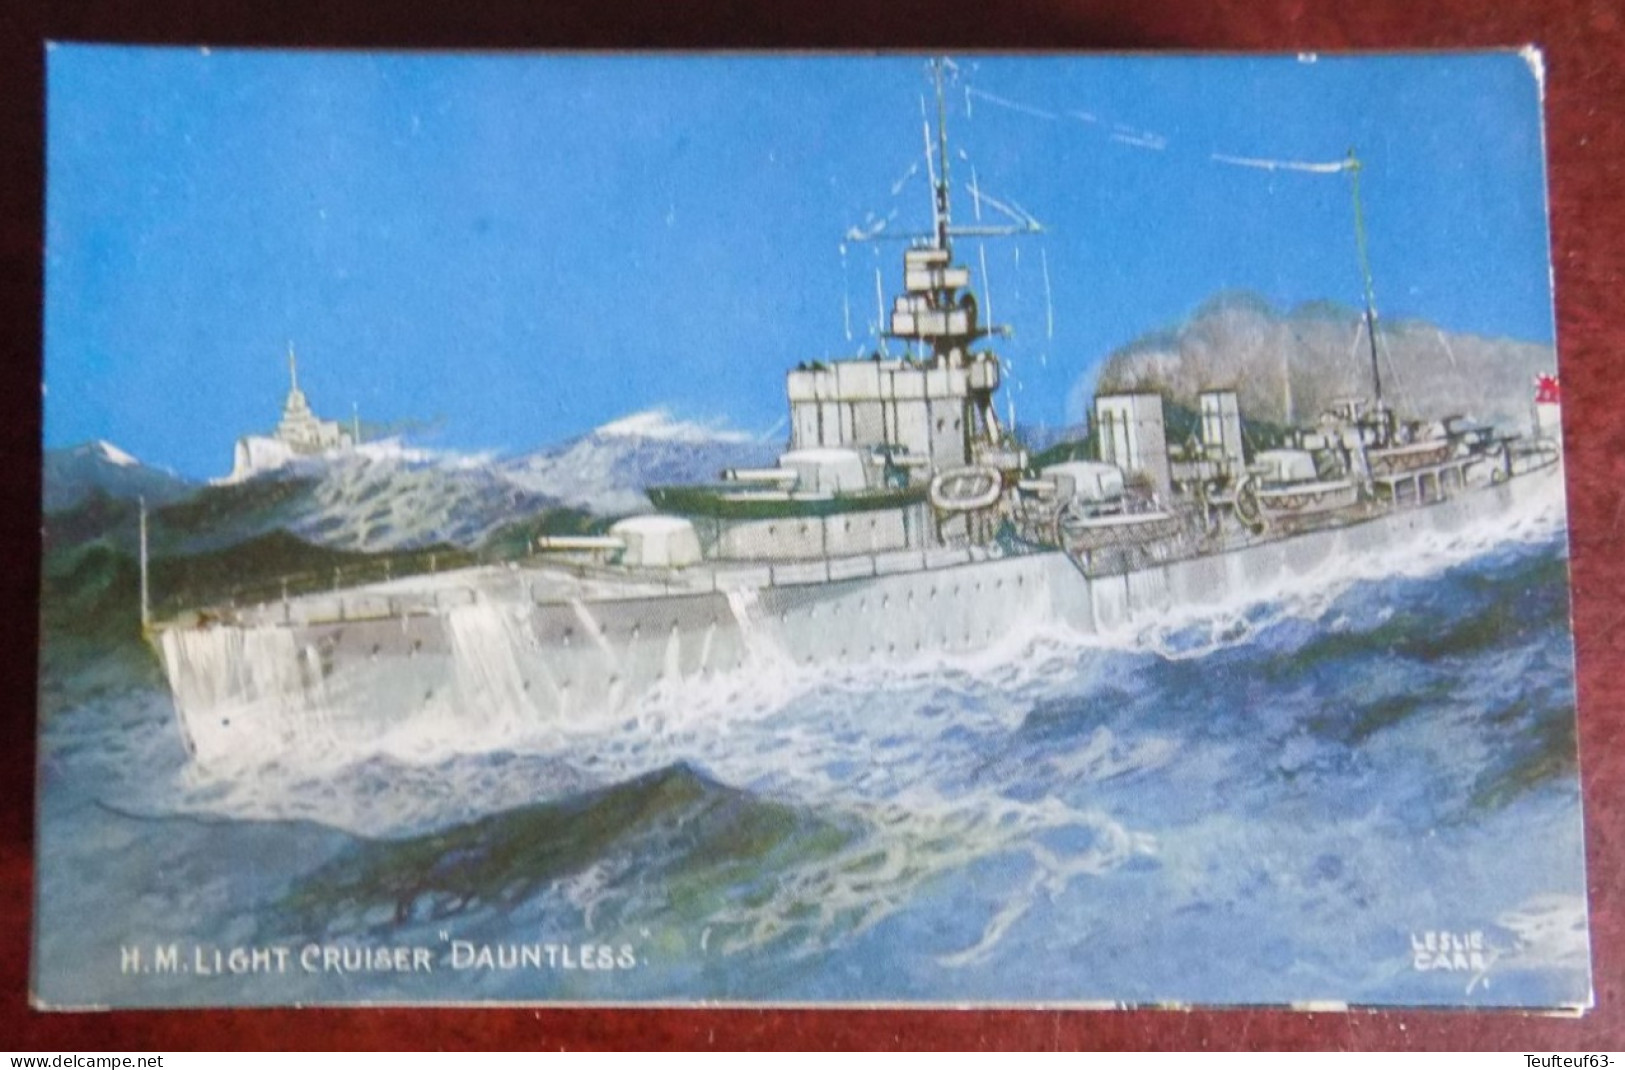 Cpm Bateau  H.M. Light Cruiser Dauntless - Ill. Leslie Carr - Warships